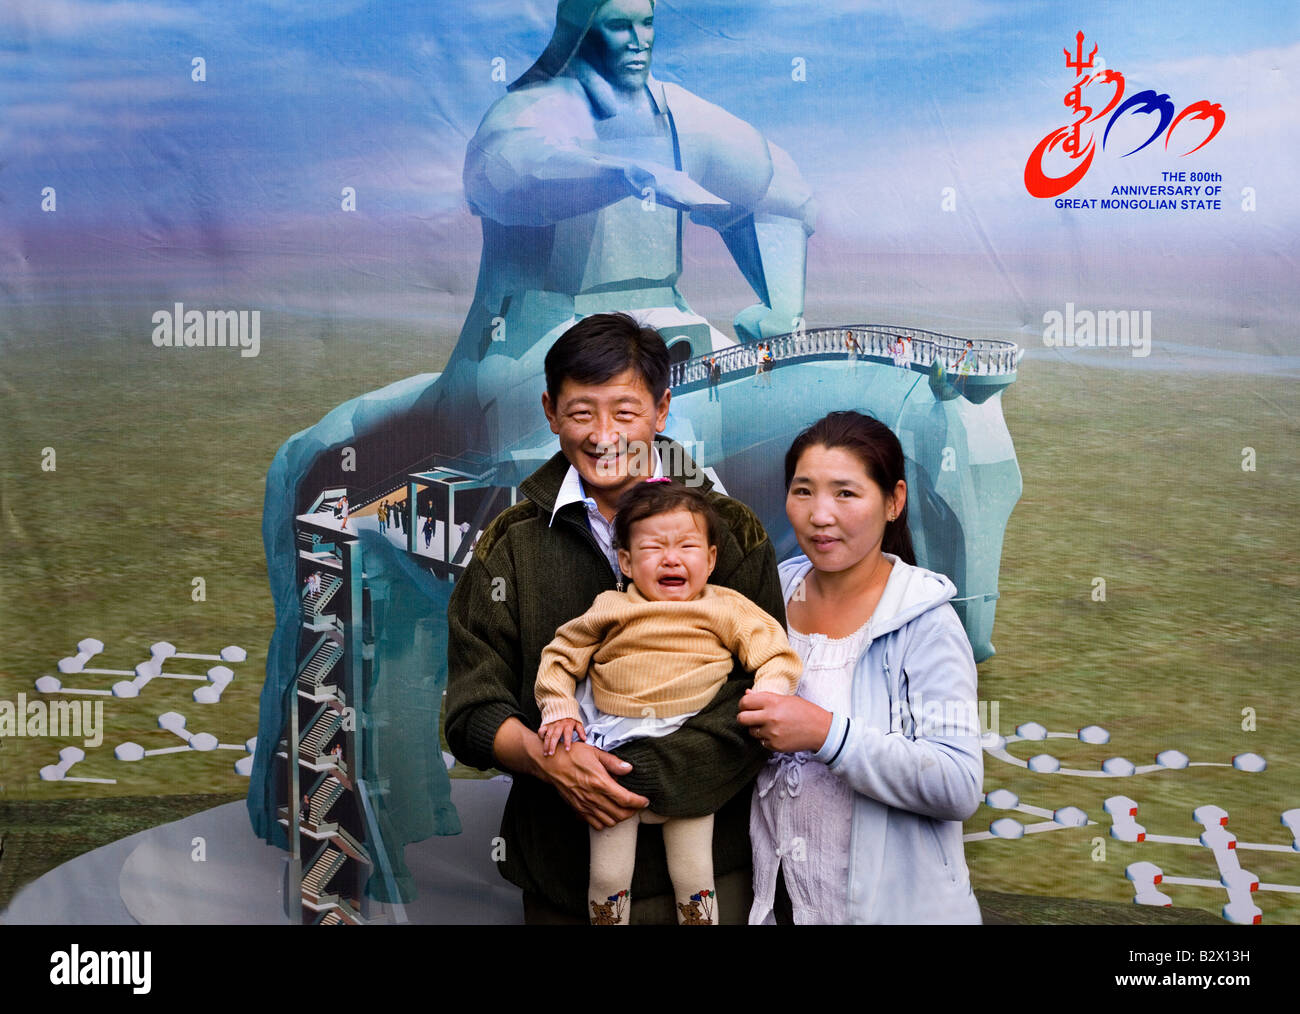 Woche das Naadam-Fest feiert das 800. Jubiläum oder der mongolischen Staat, Dschingis Khan Fotokabine Teilnehmer Stockfoto